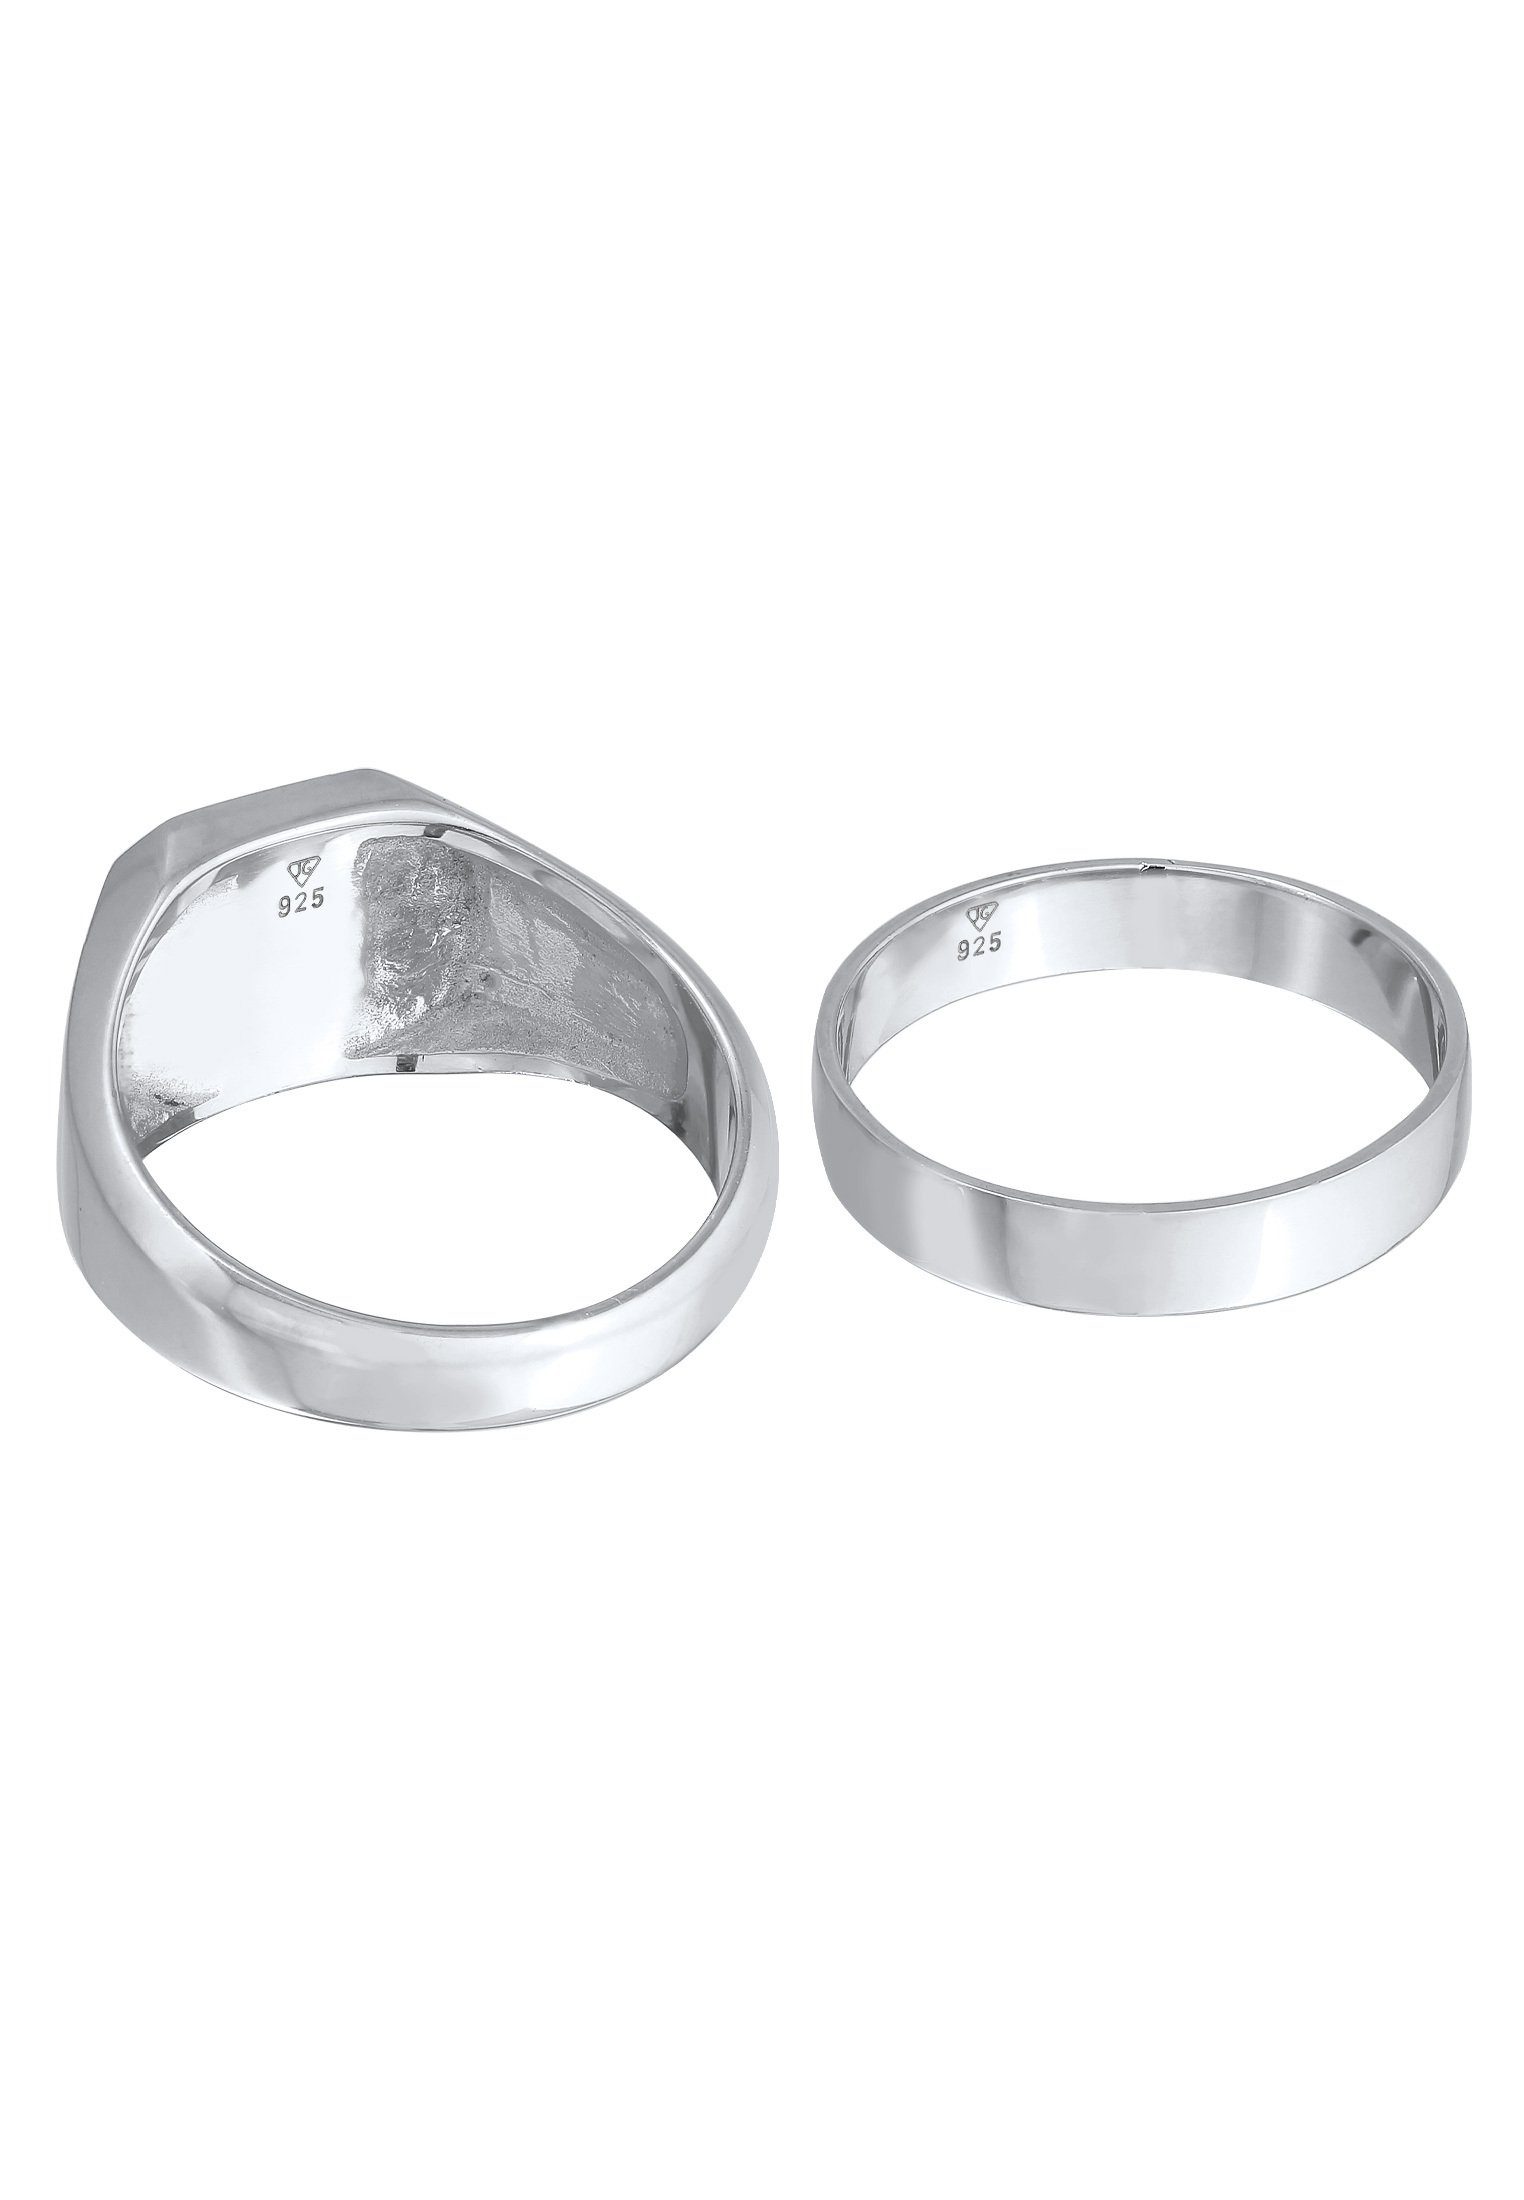 Silber Kuzzoi Set Bandring 925 Siegelring Kuzzoi Ring-Set